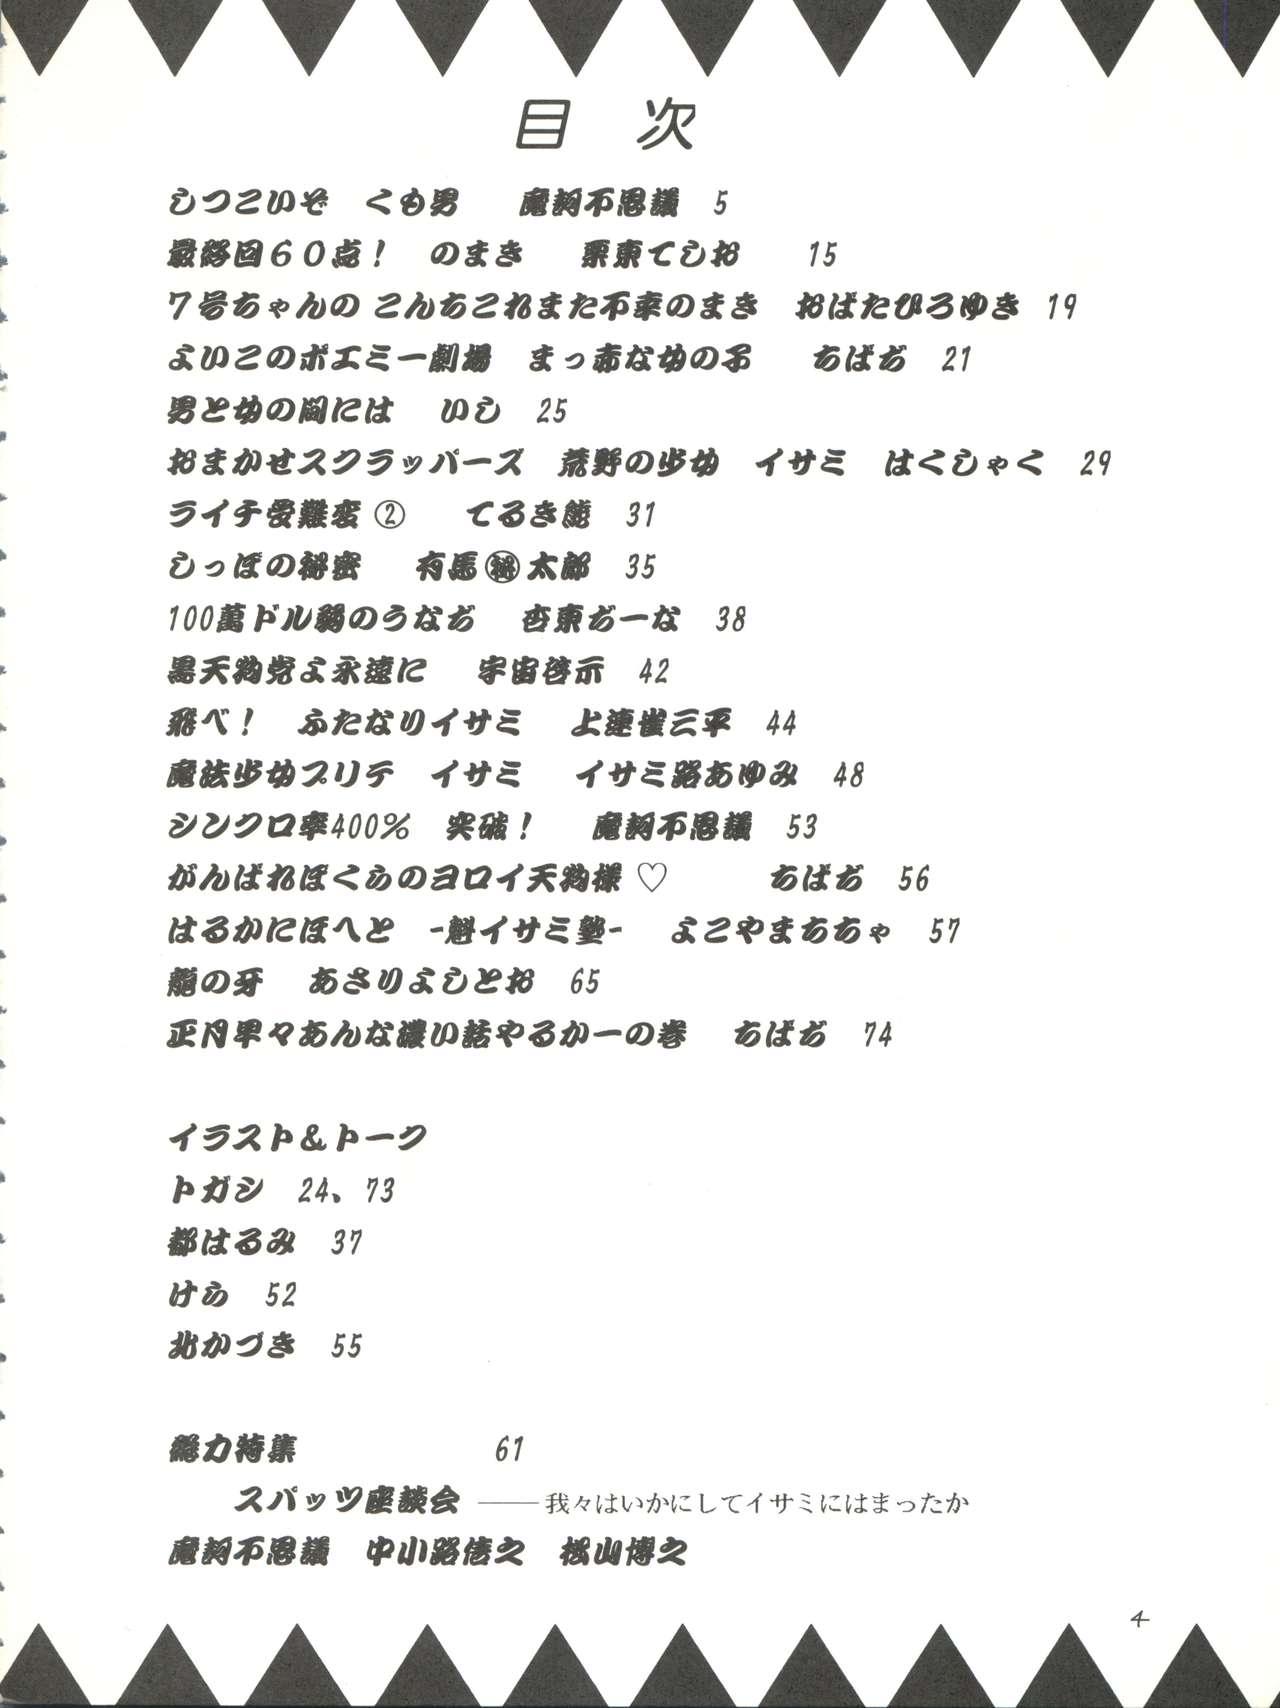 Sixtynine Kaiketsu Spats - Tobe isami Close Up - Page 4